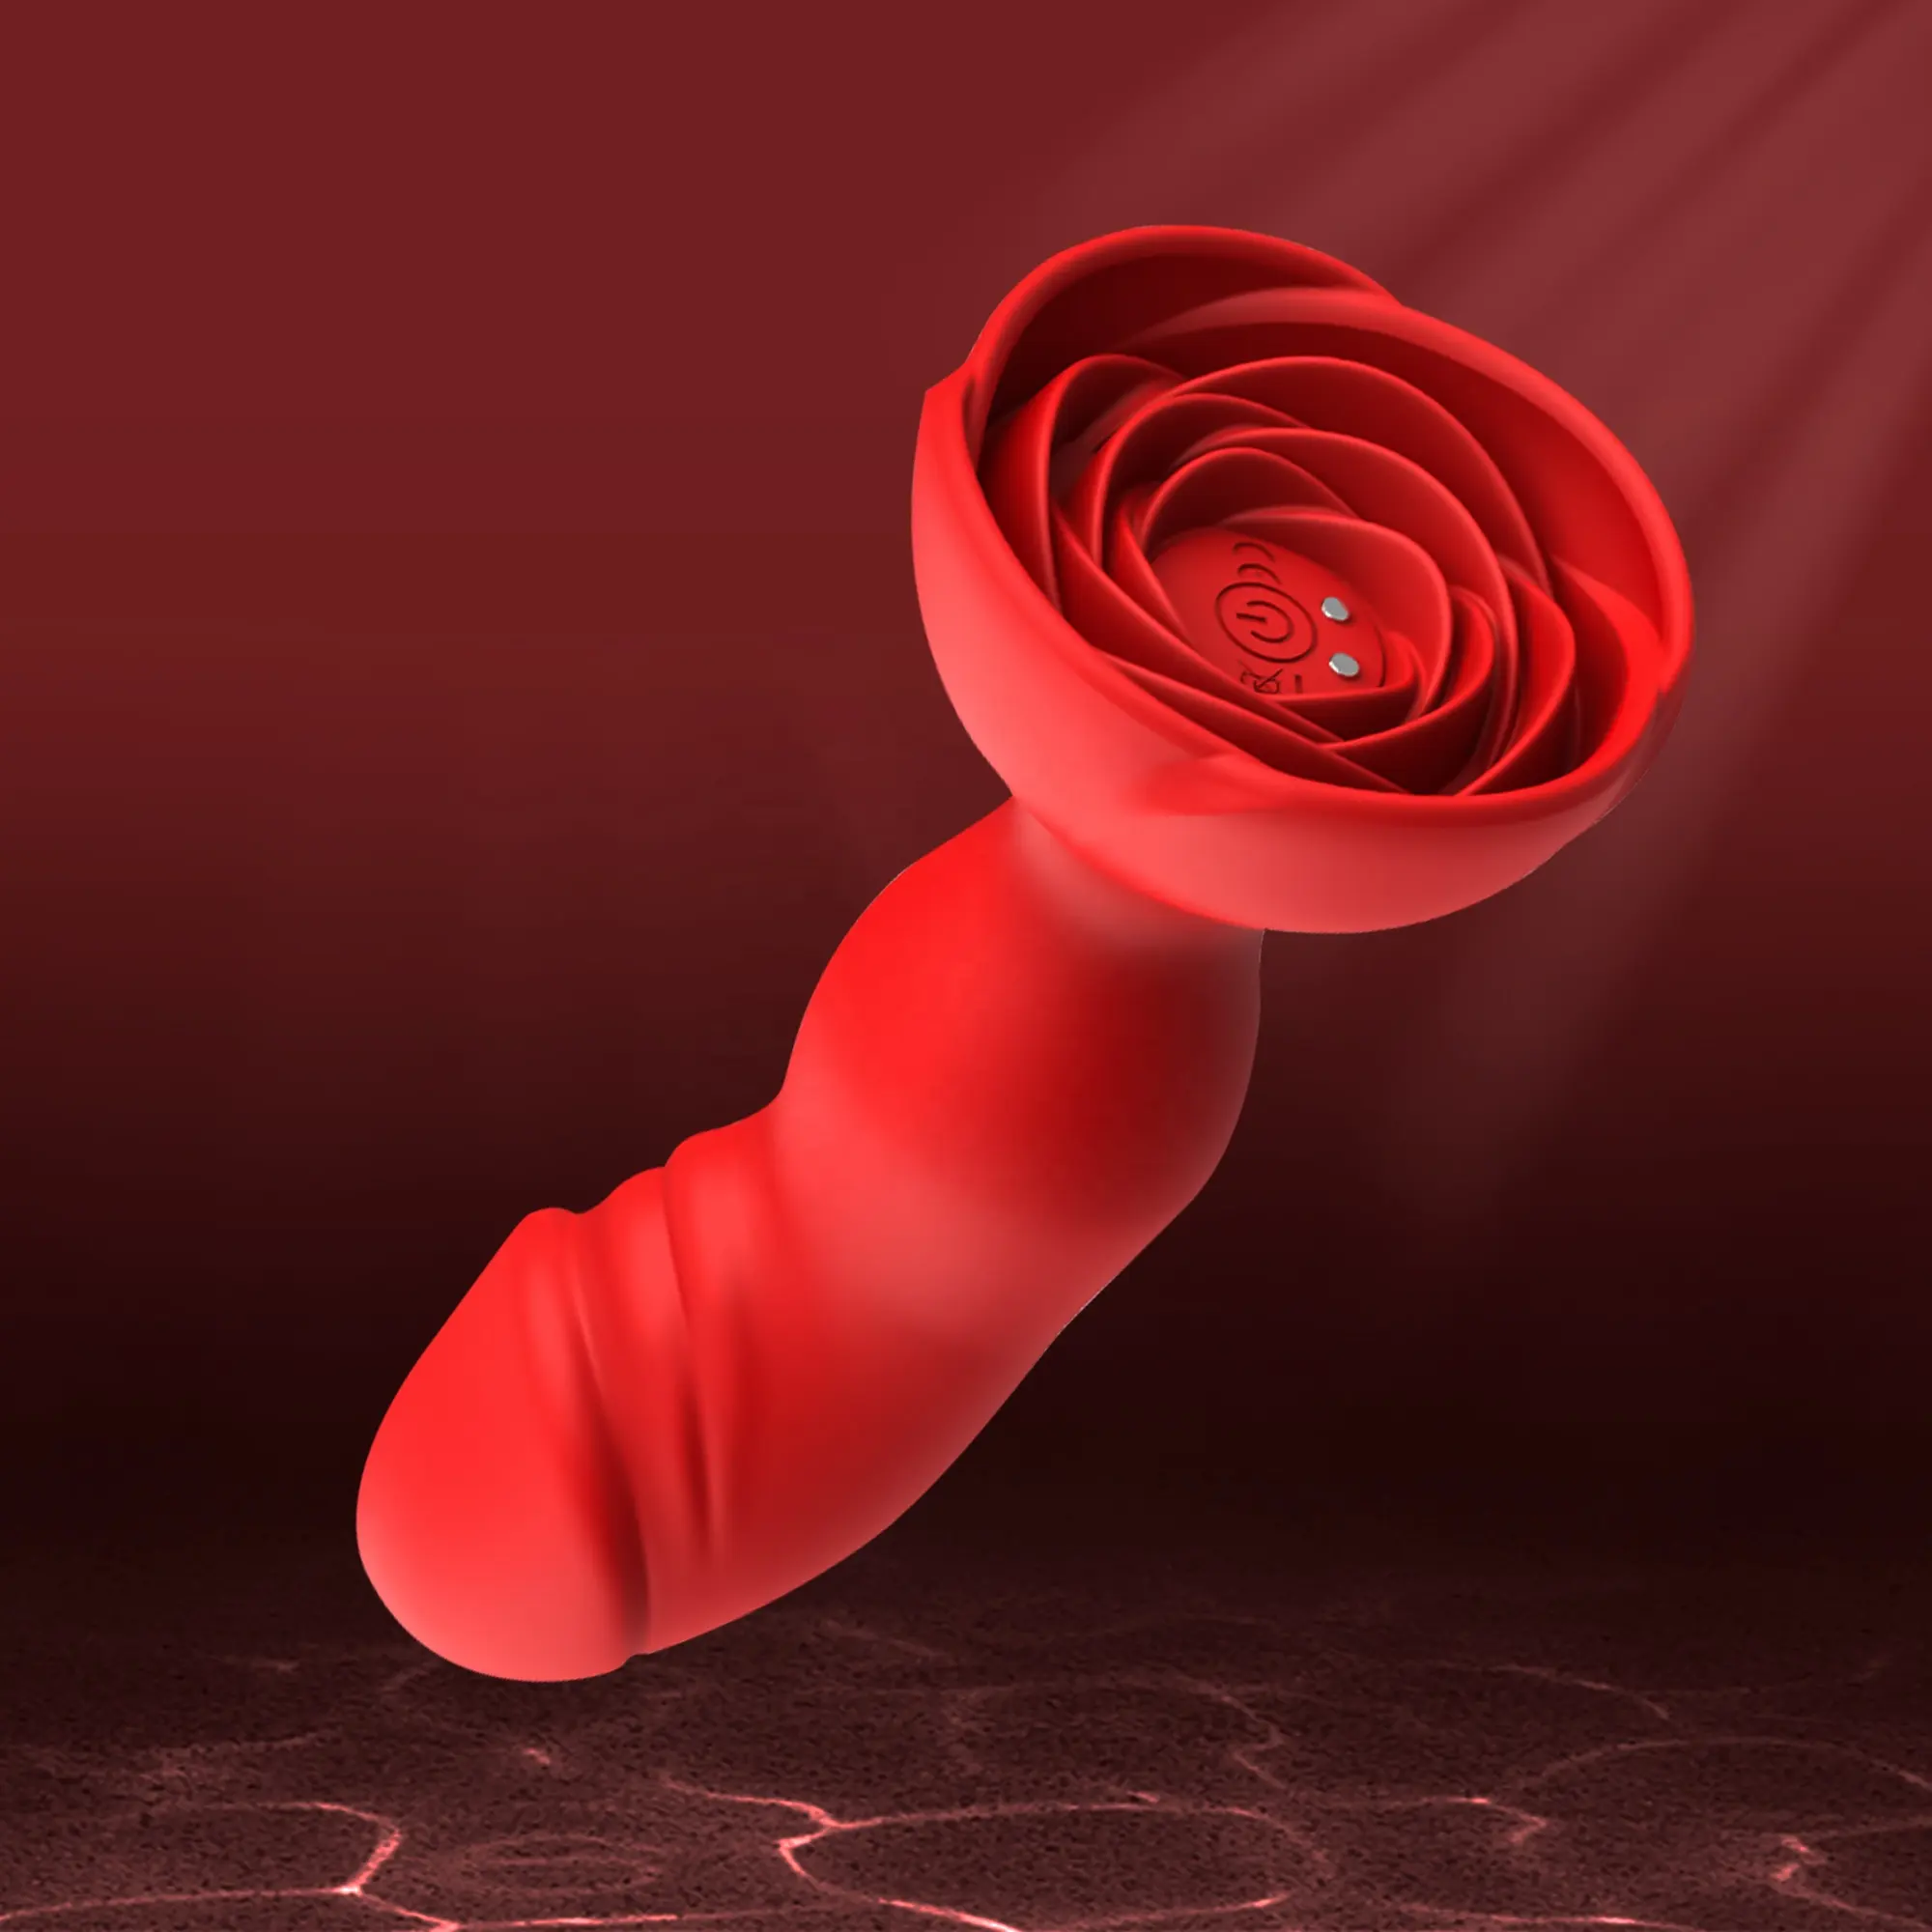 AAV Drop Shipping Leistungs starkes Saugen Erwachsenen Stimulator Massage gerät Rose Vibrator Sexspielzeug für Frauen